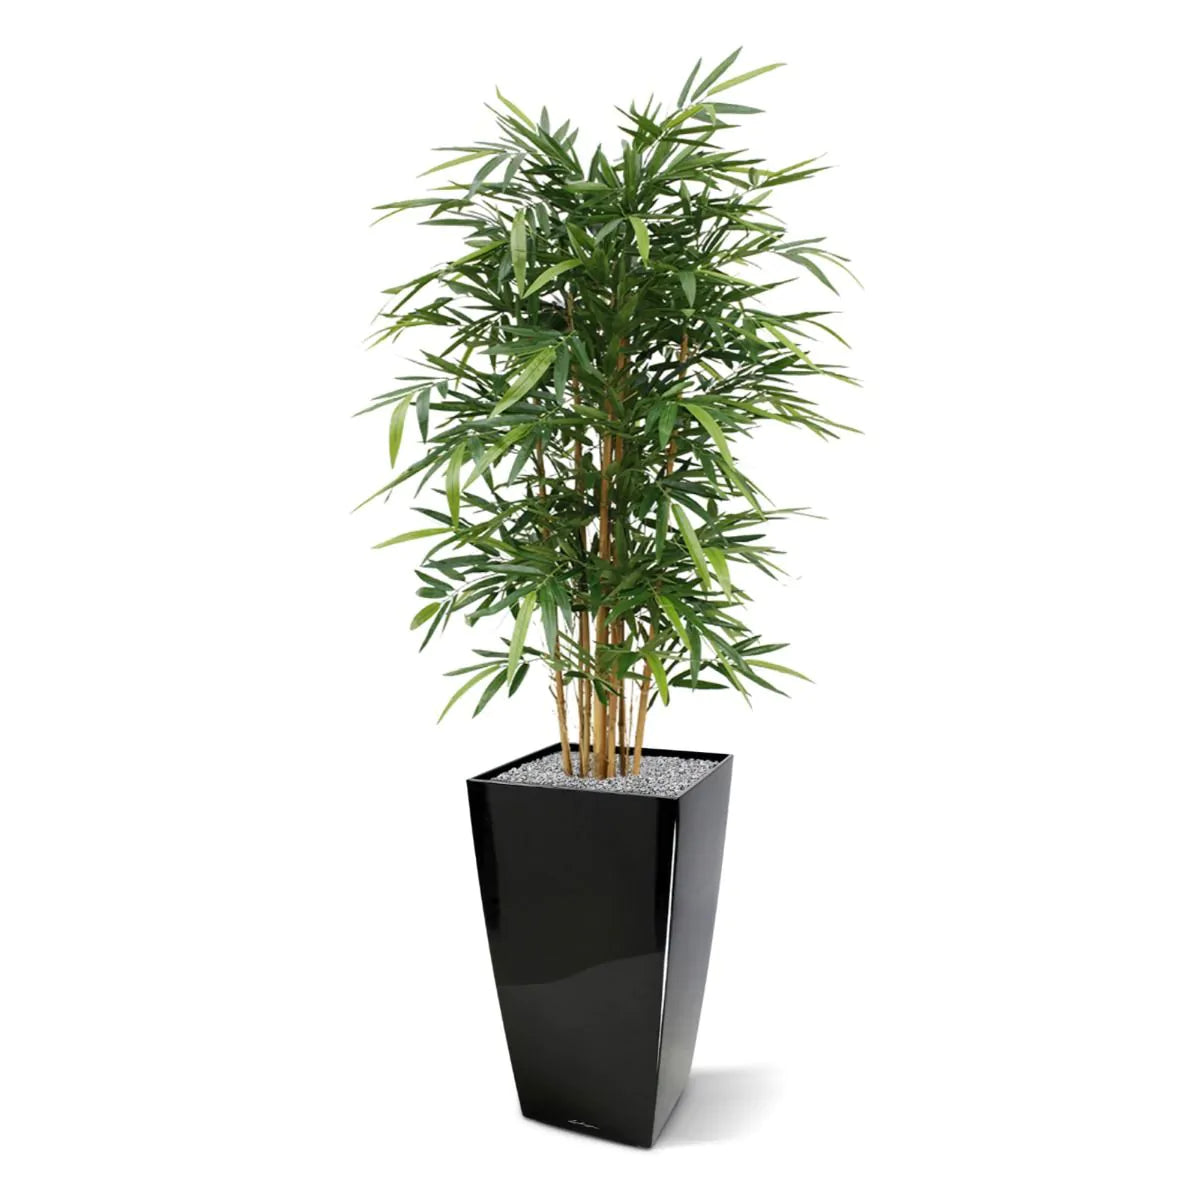 Pflanzenglanz® Bambus Kunstpflanze Kunstbaum Deluxe 150 cm